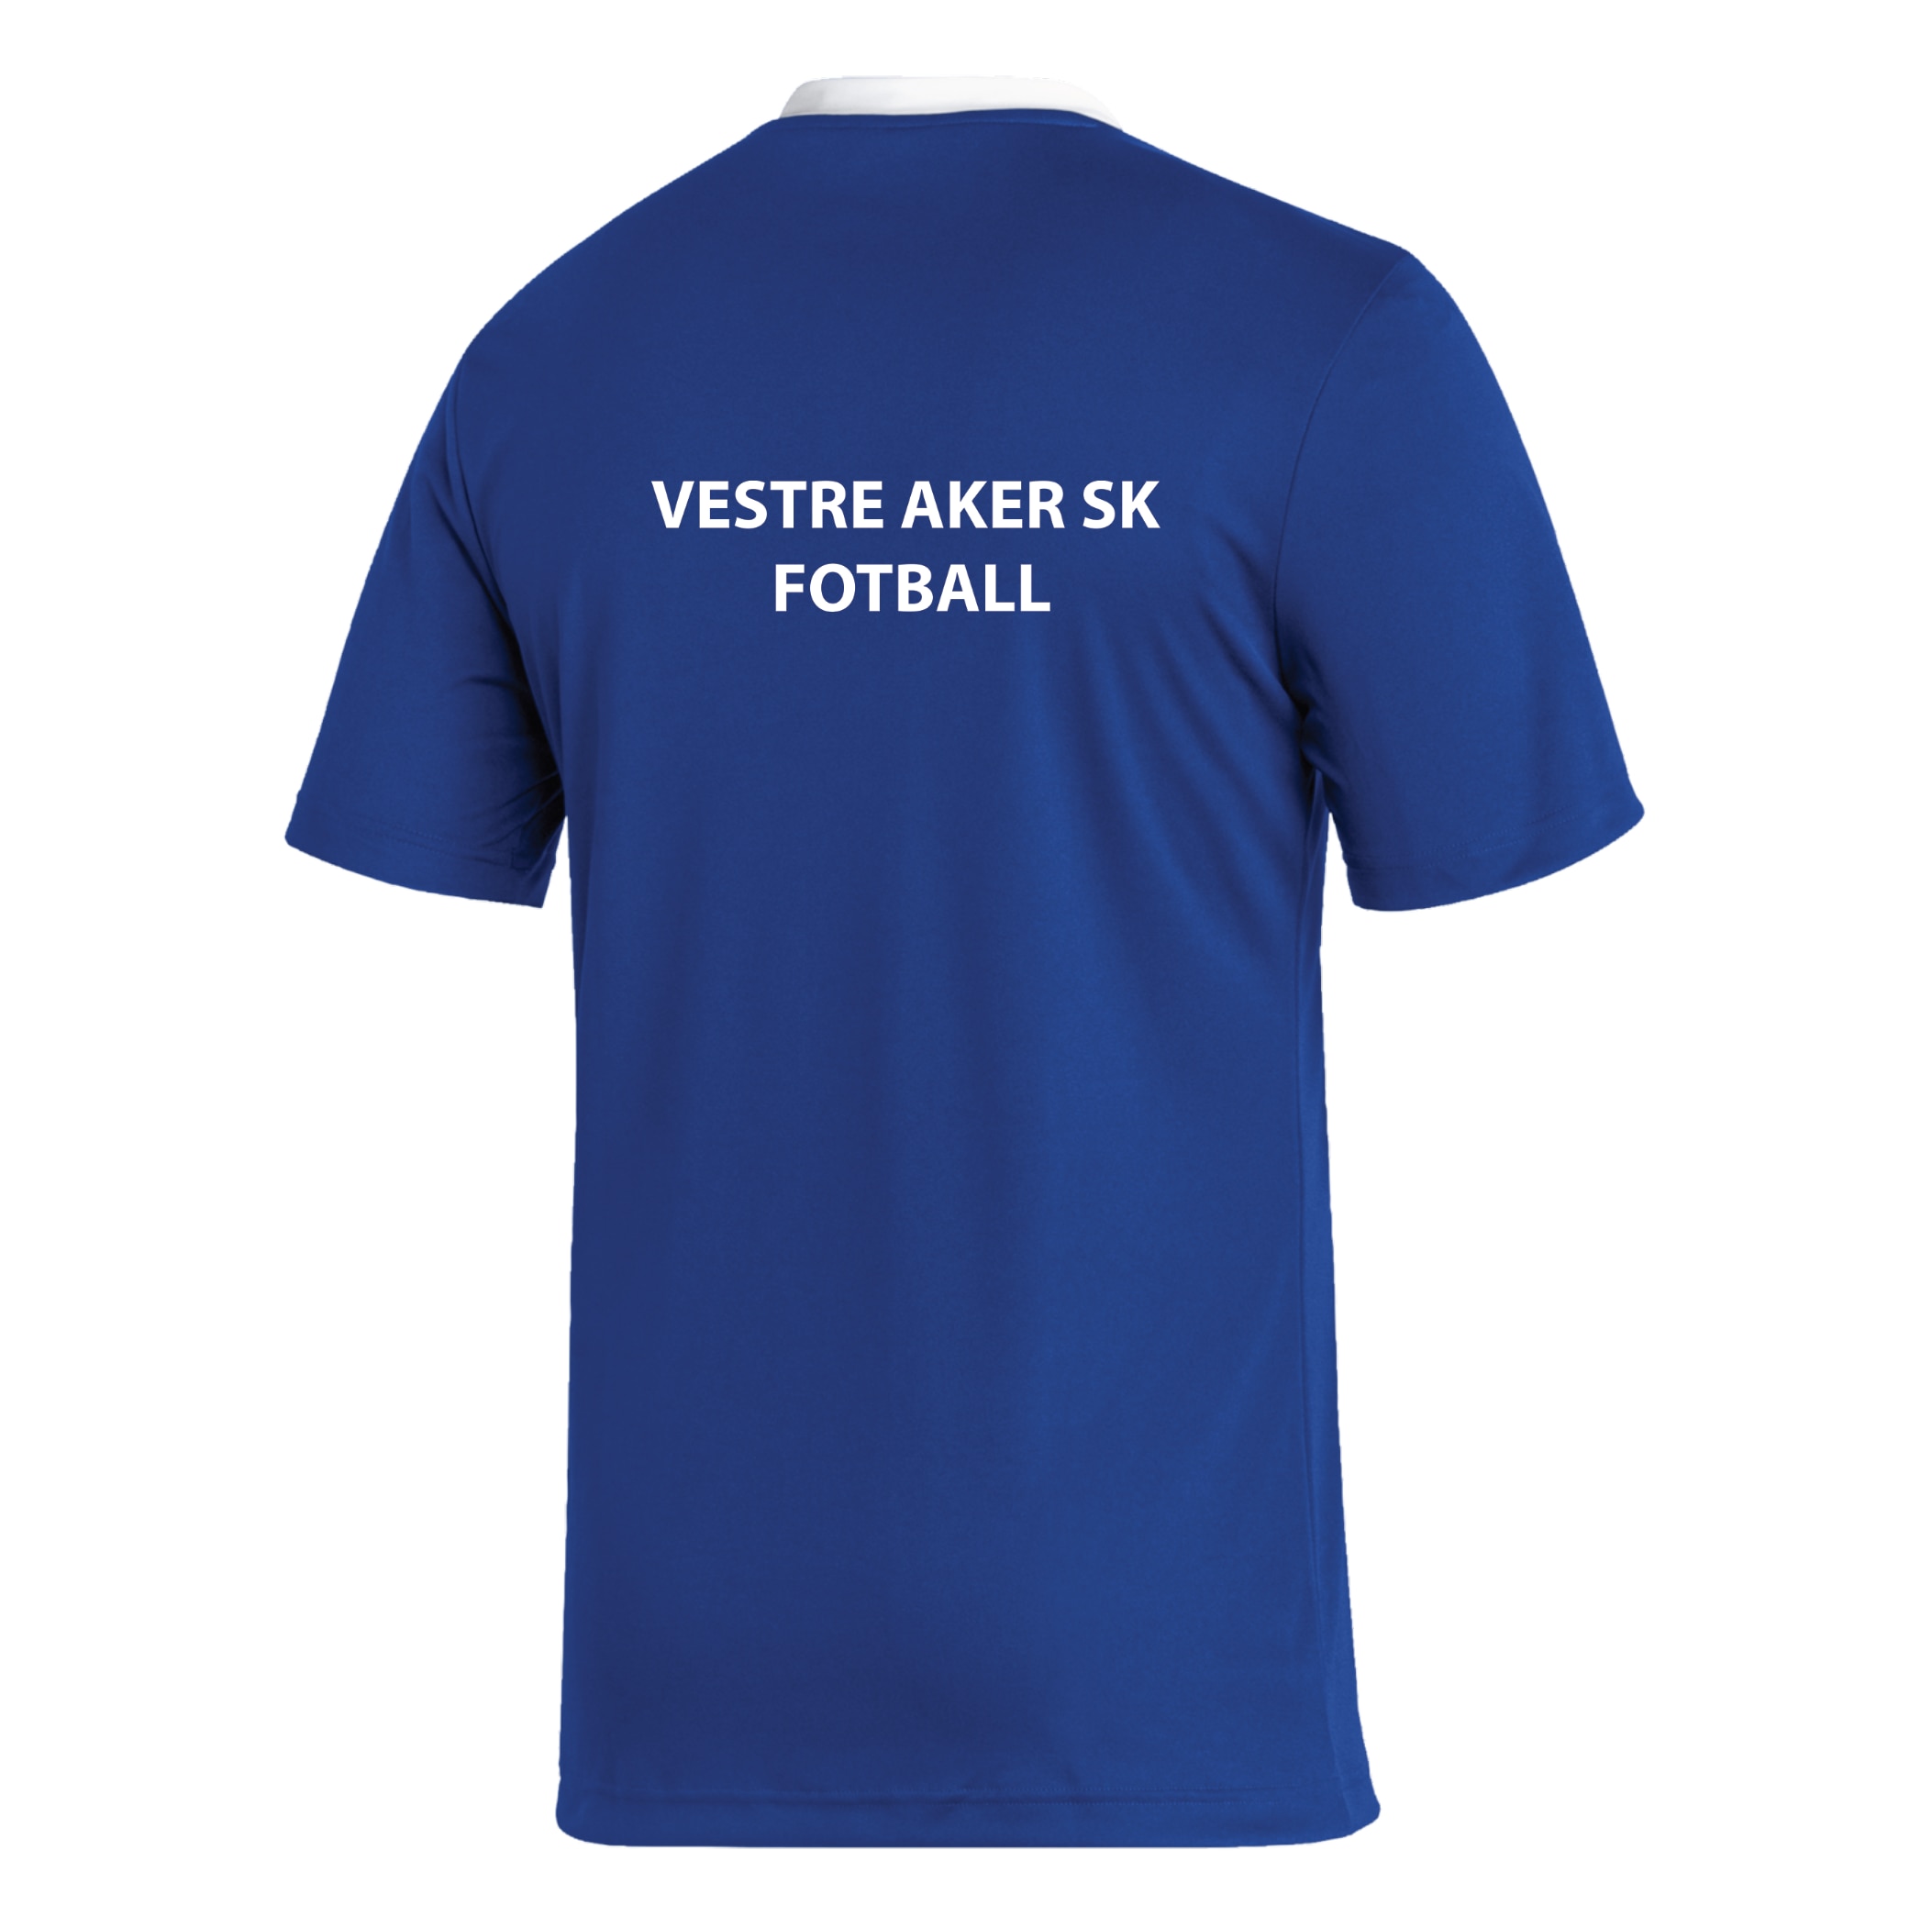 Adidas Vestre Aker SK Treningstrøye